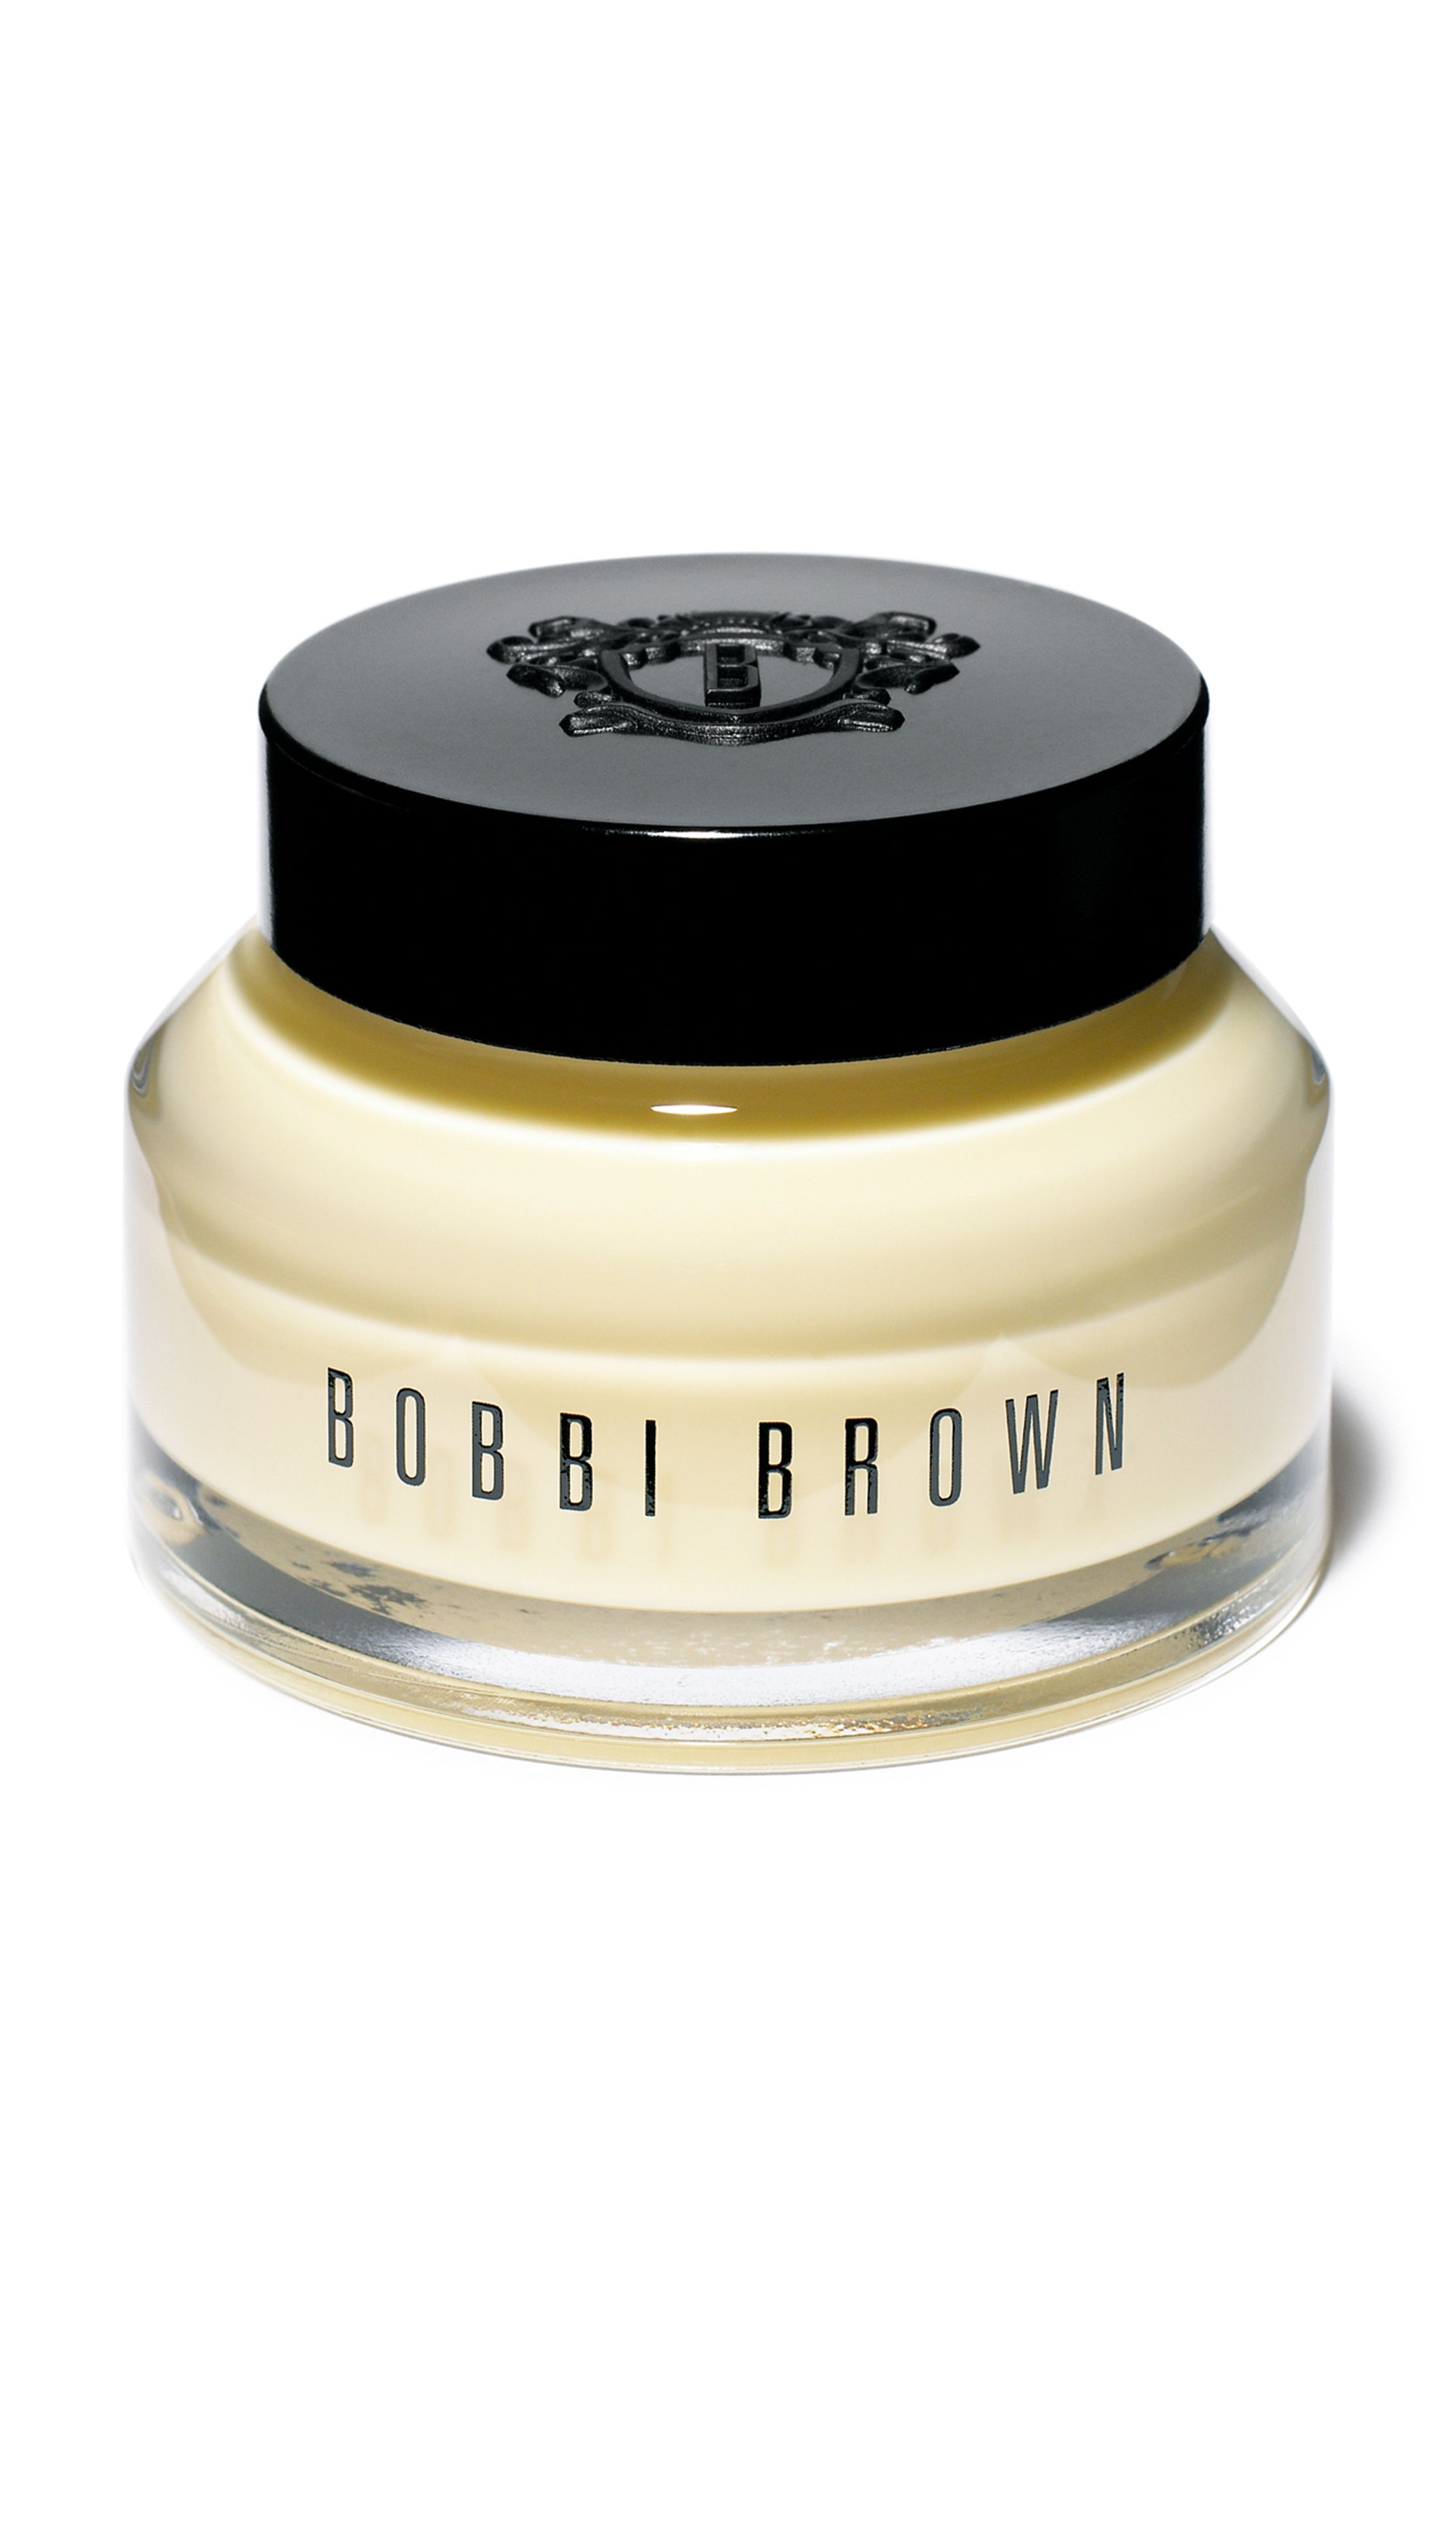 Bobbi brown vitamin. Бобби Браун косметика крем. Бобби Браун крем для лица. Питательный бальзам Бобби Браун. Vitamin enriched face Base.